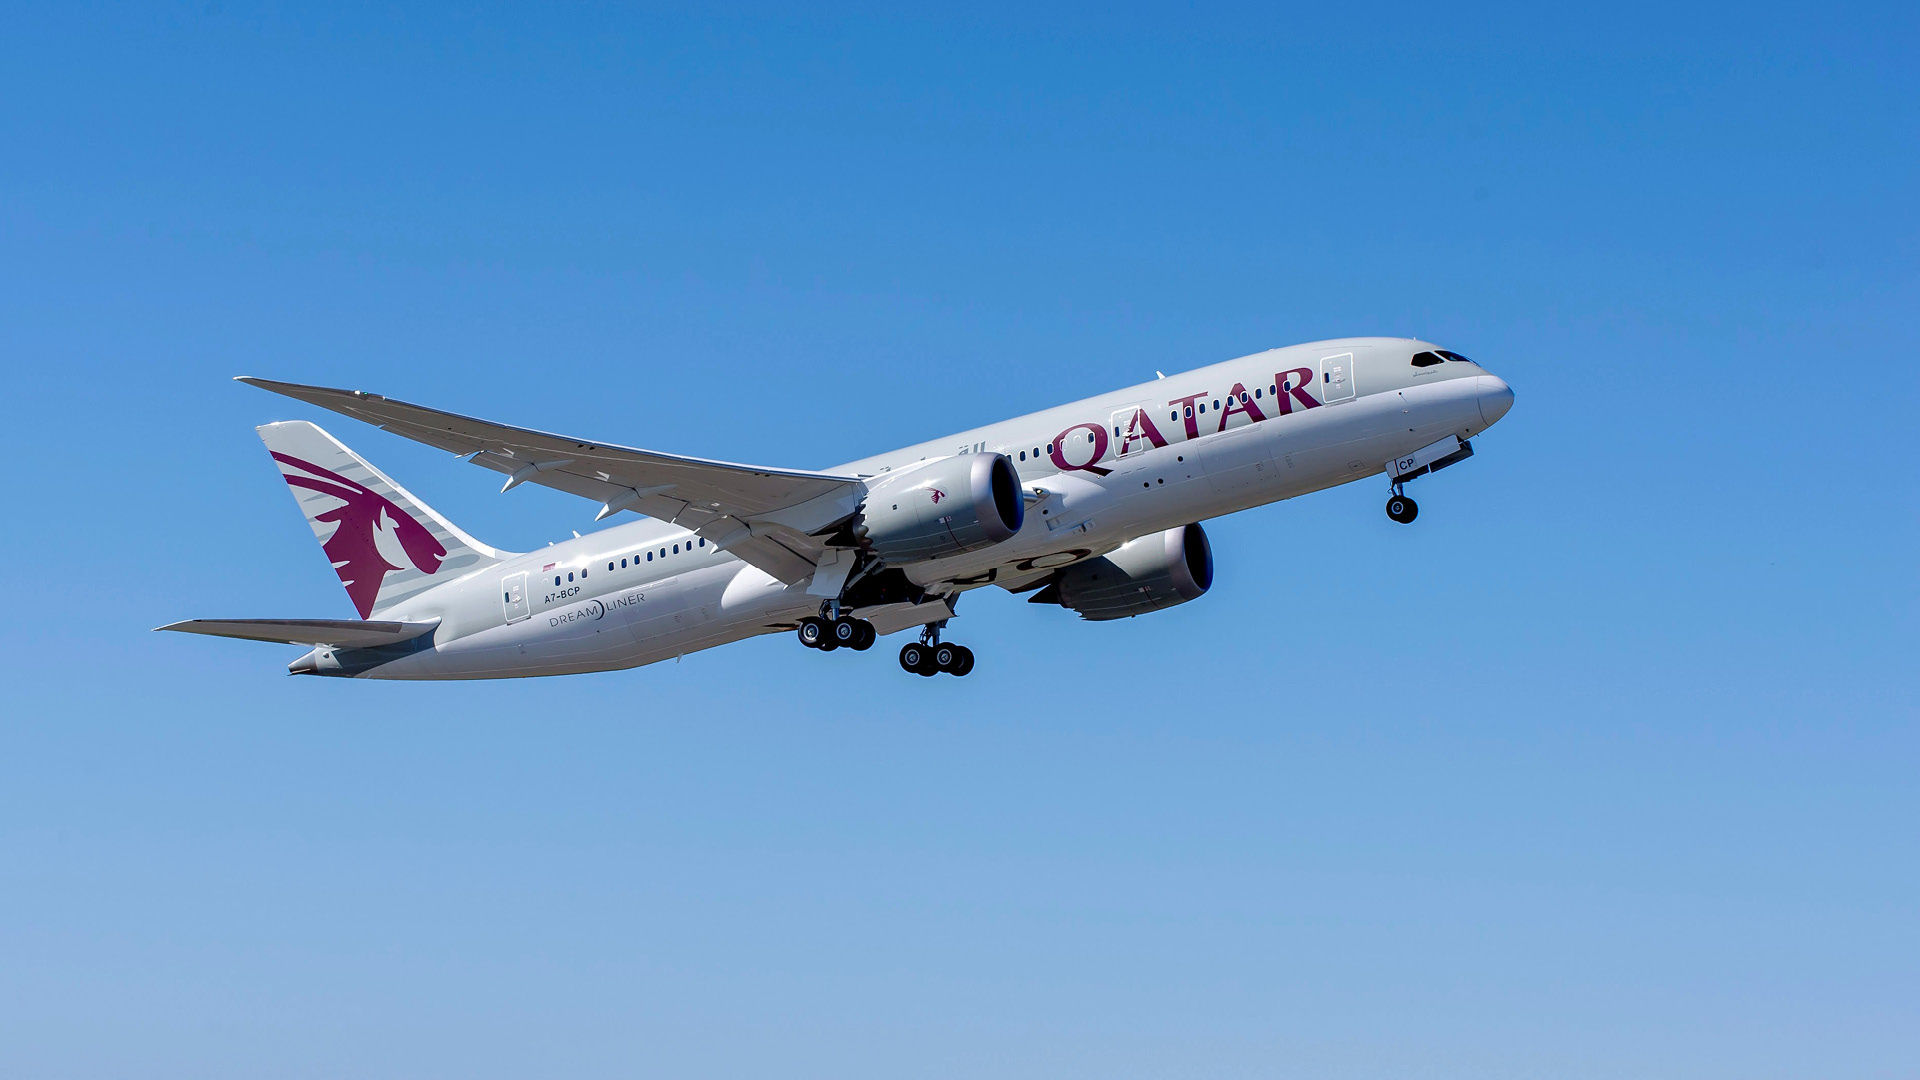 EXCLUSIVE: Deepika Padukone set to jet off to Qatar to unveil the